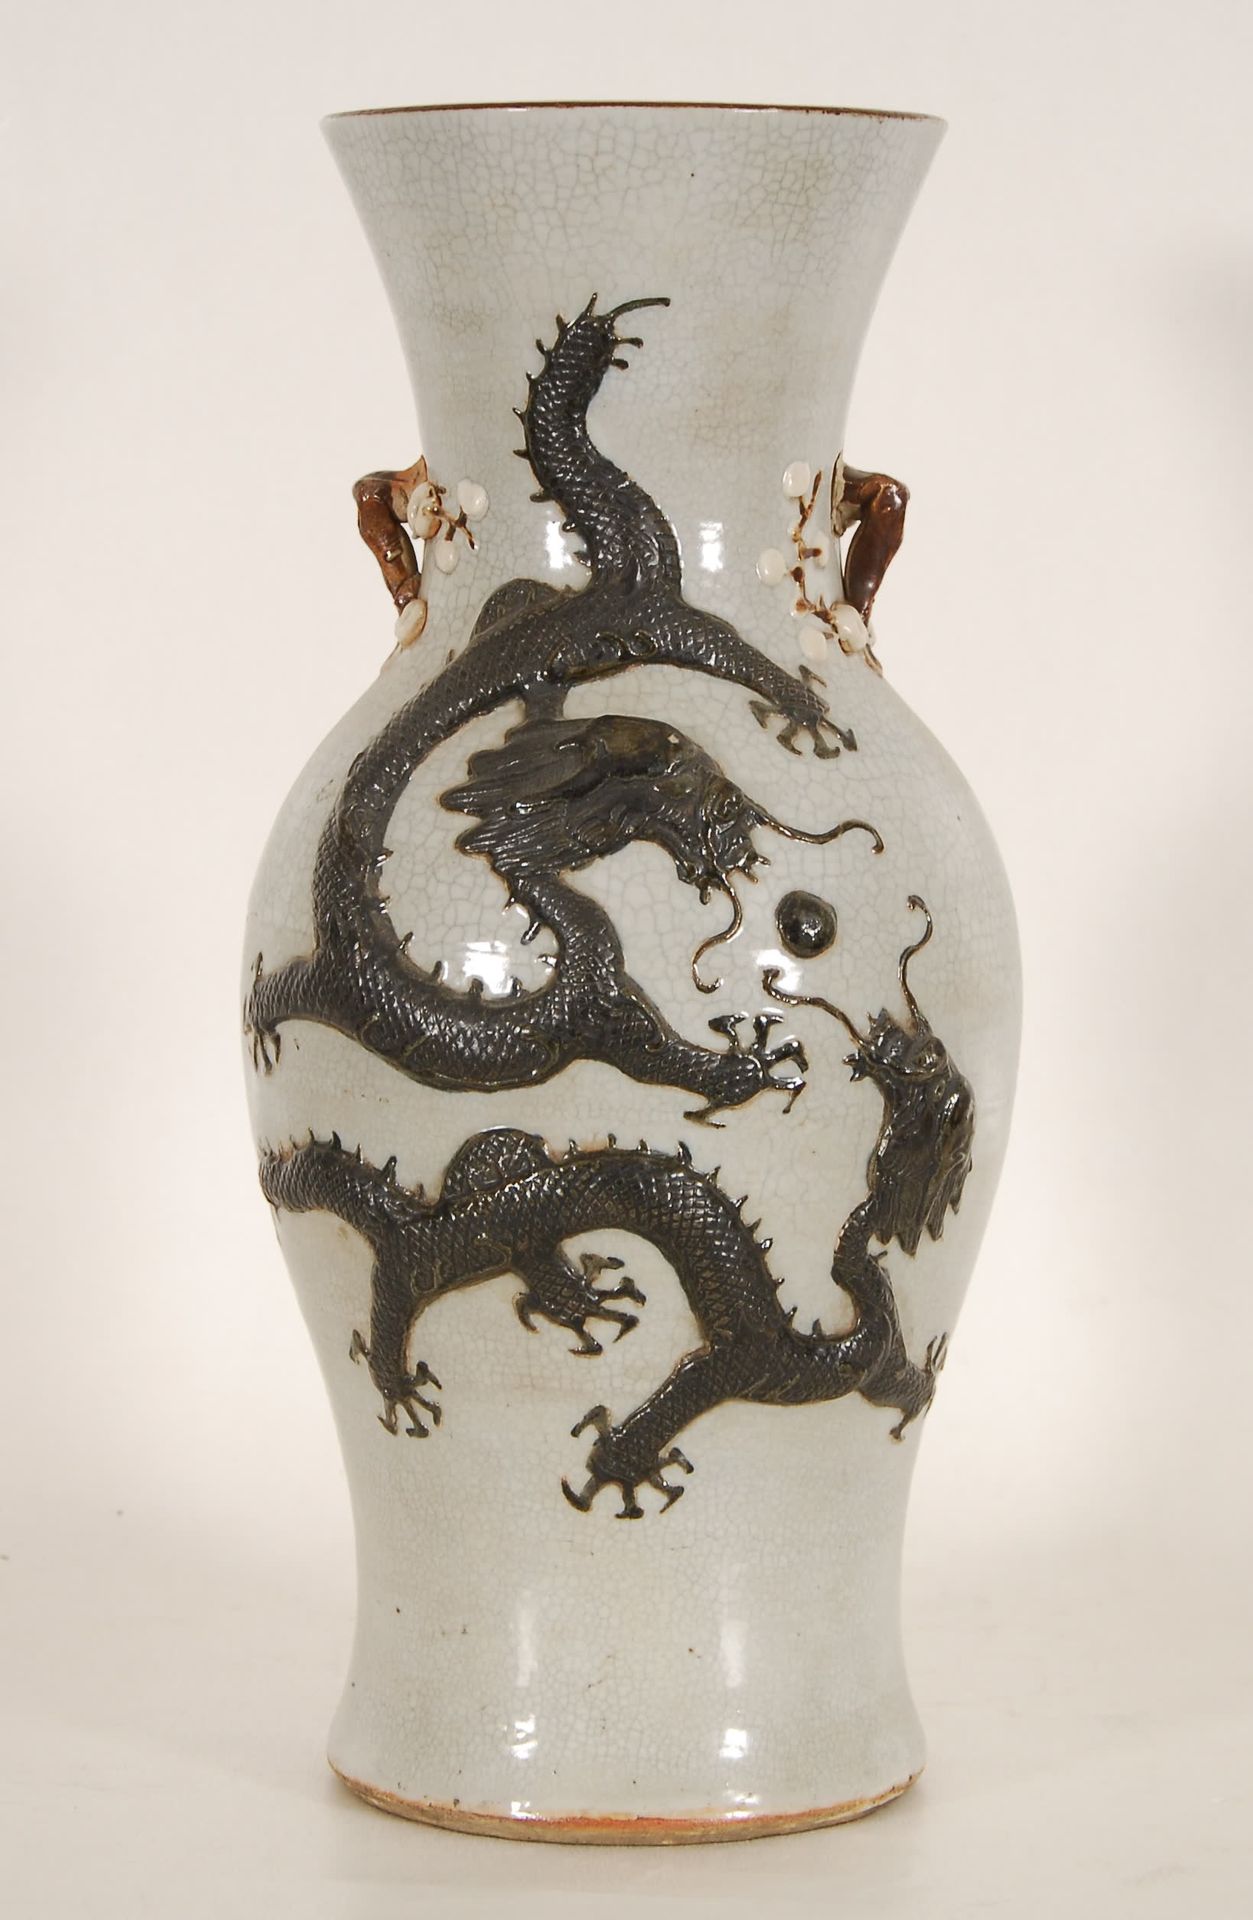 Null 阳台花瓶有两个把手
裂纹背景上的龙的浮雕装饰。中国，南京，标记。
，高43厘米。